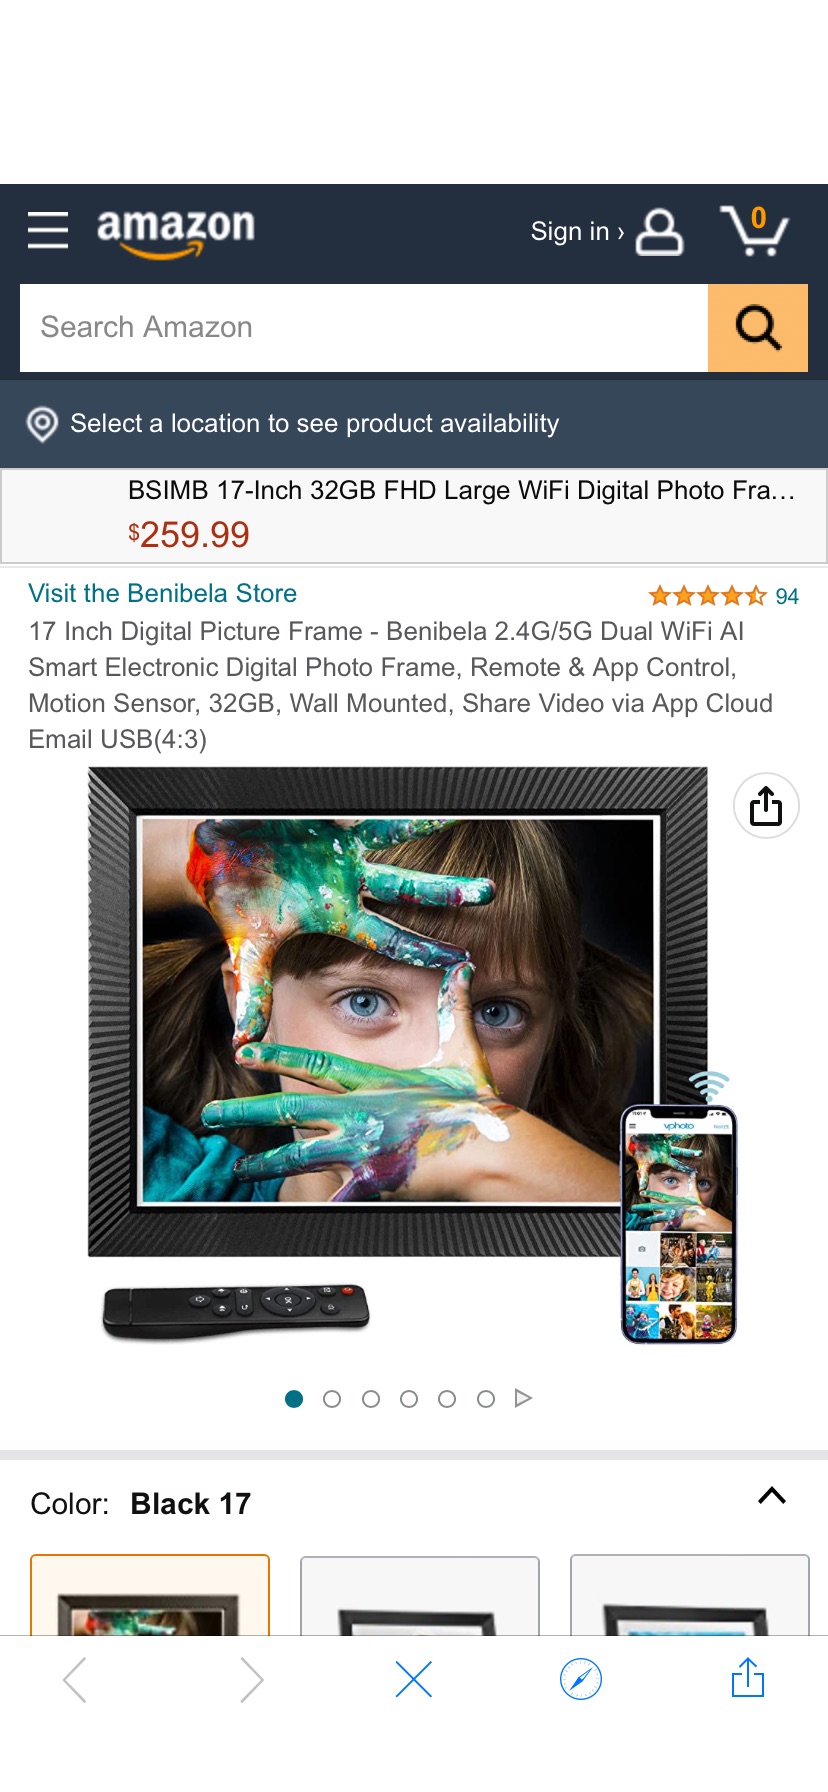 Amazon.com : 17 Inch Digital Picture Frame - Benibela 2.4G/5G Dual WiFi AI Smart Electronic Digital Photo Frame, Remote & App Control, Motion Sensor, 32GB